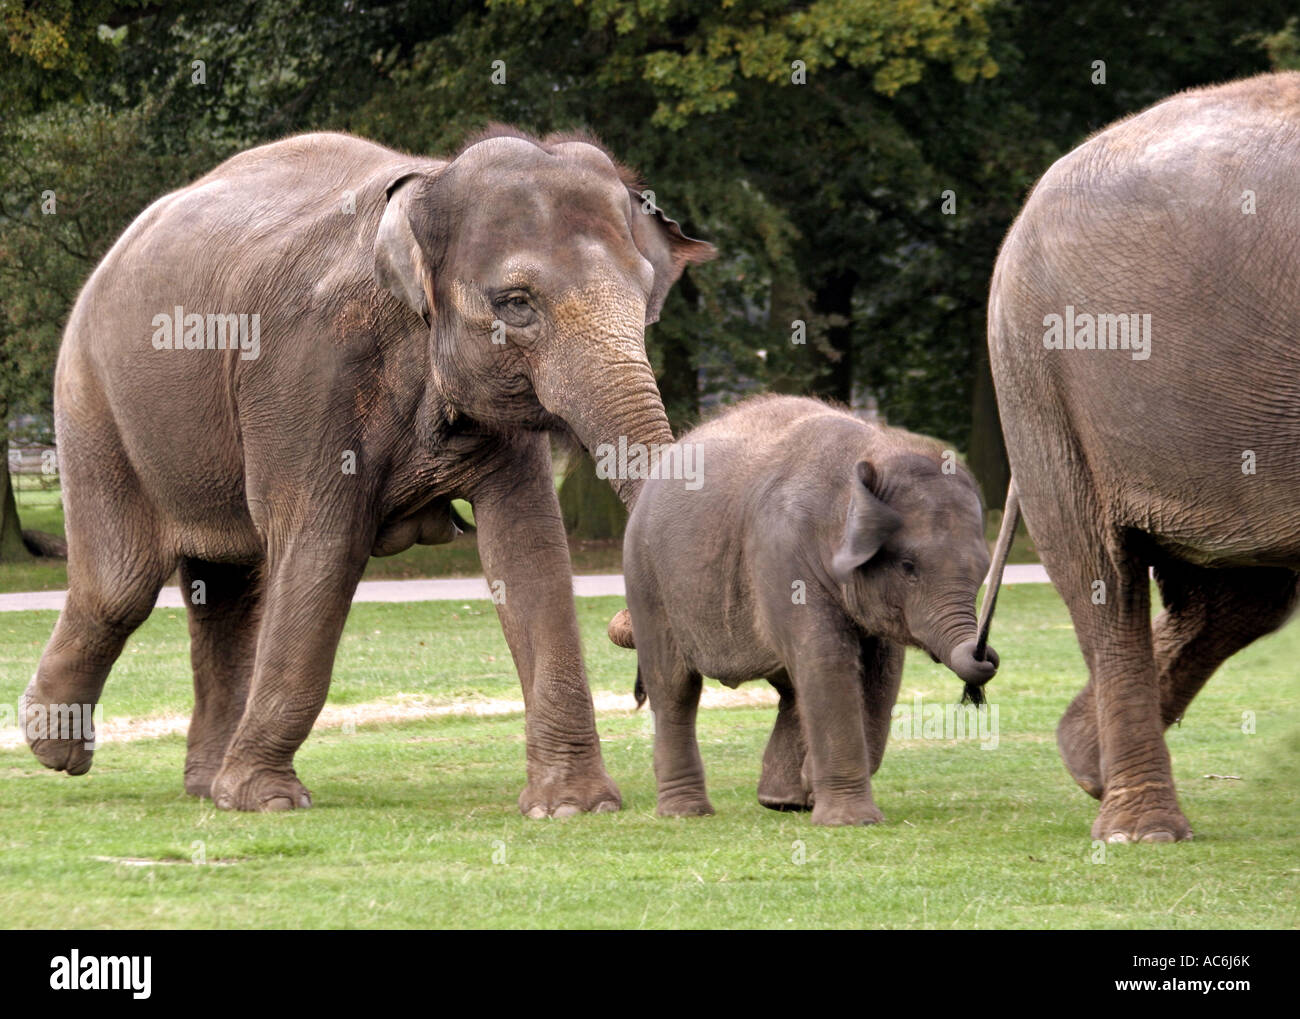 Wild elephants Walking, Bedford shire,England,UK Stock Photo